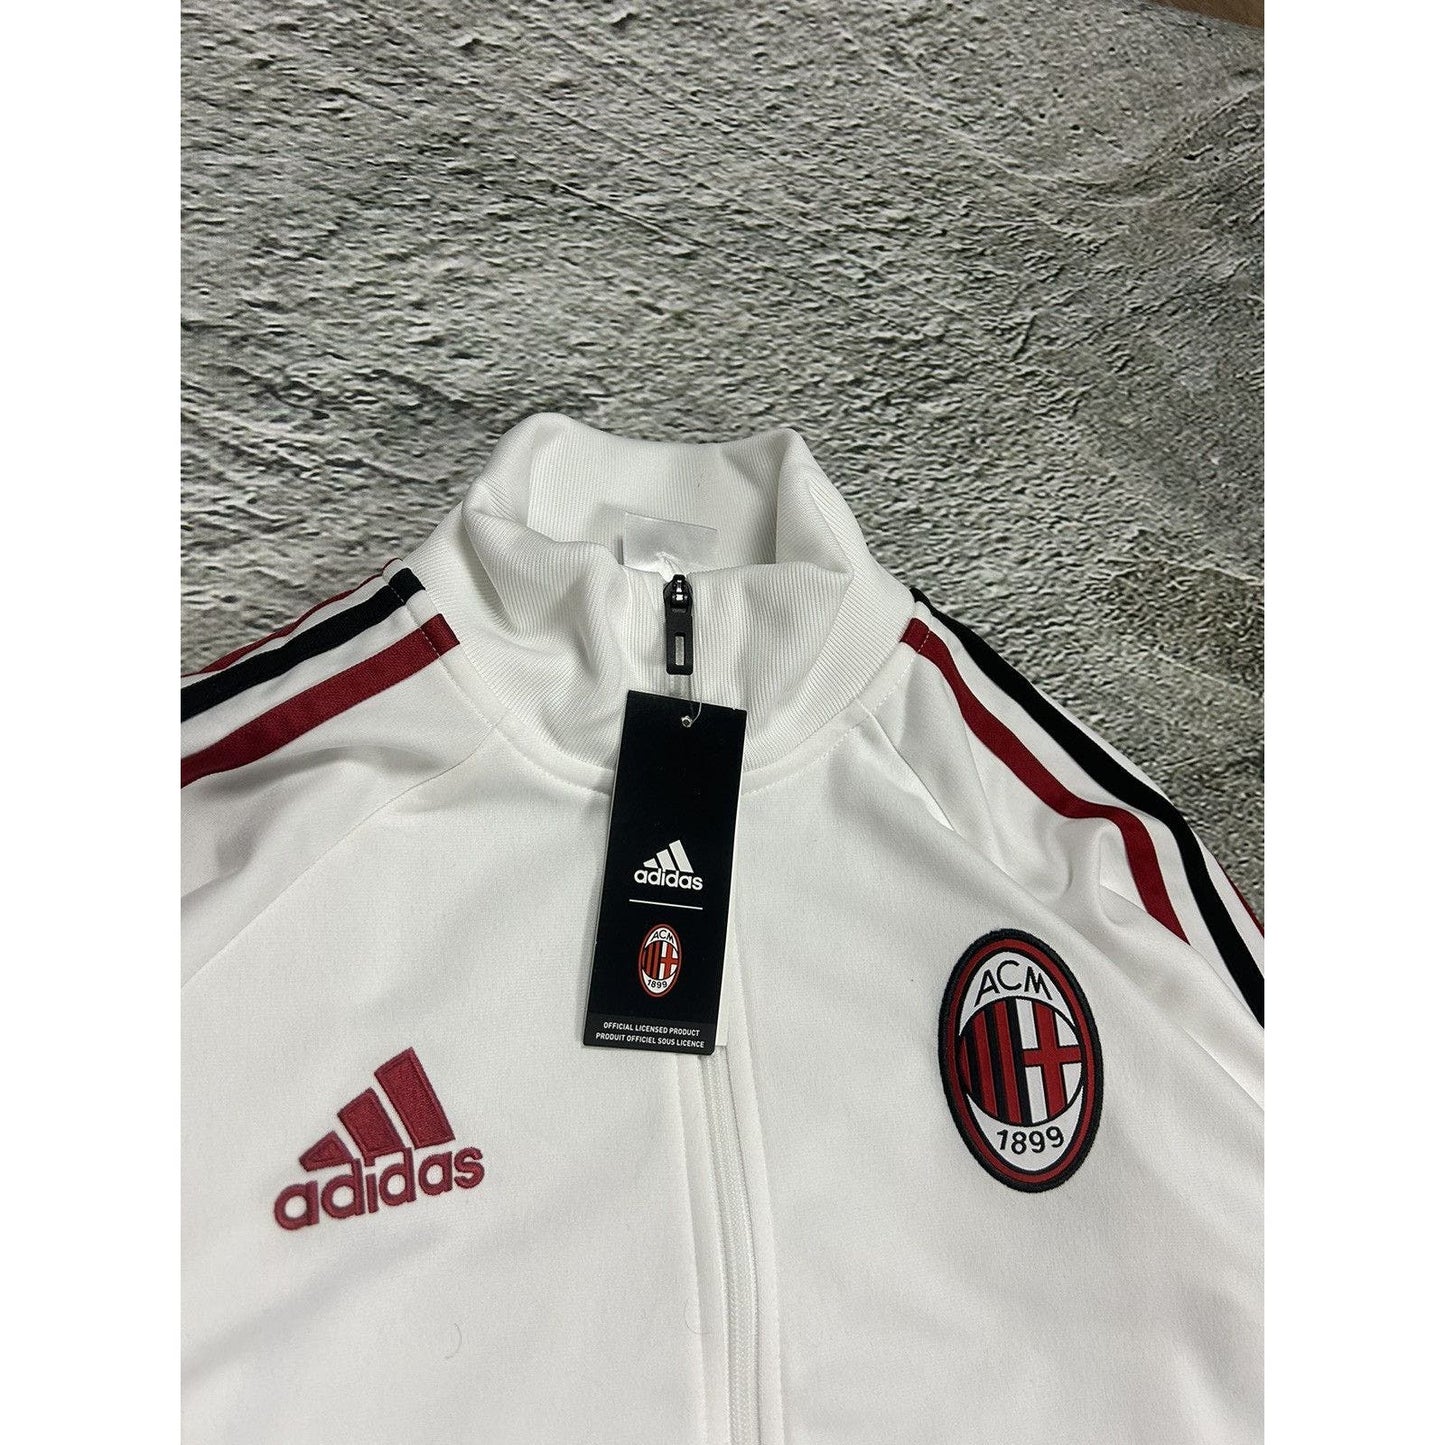 AC Milan track suit adidas Champions League 2017 2018